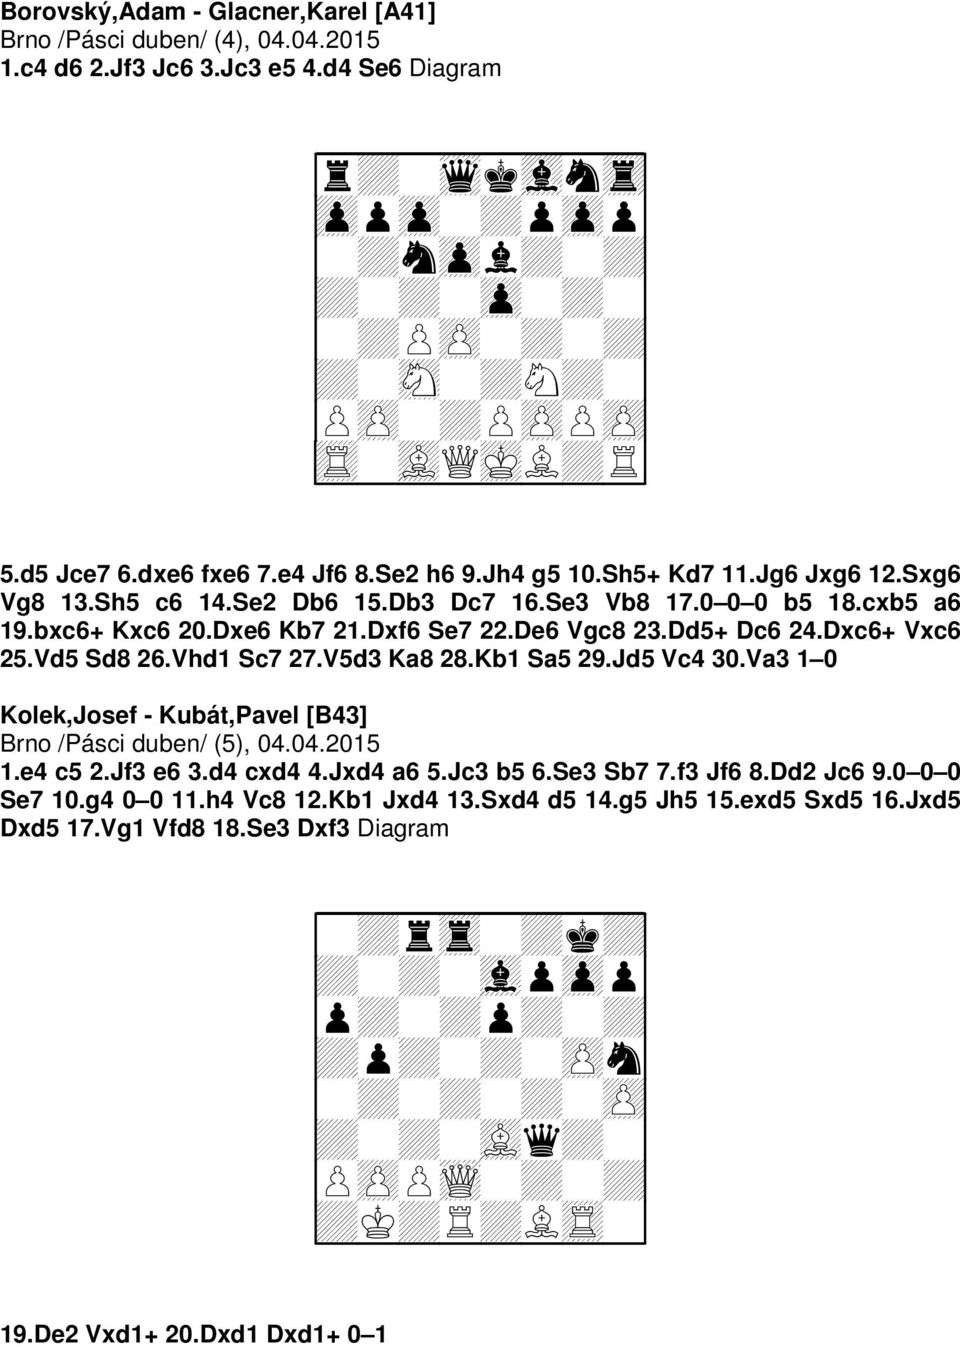 Vd5 Sd8 26.Vhd1 Sc7 27.V5d3 Ka8 28.Kb1 Sa5 29.Jd5 Vc4 30.Va3 1 0 Kolek,Josef - Kubát,Pavel [B43] Brno /Pásci duben/ (5), 04.04.2015 1.e4 c5 2.Jf3 e6 3.d4 cxd4 4.Jxd4 a6 5.Jc3 b5 6.